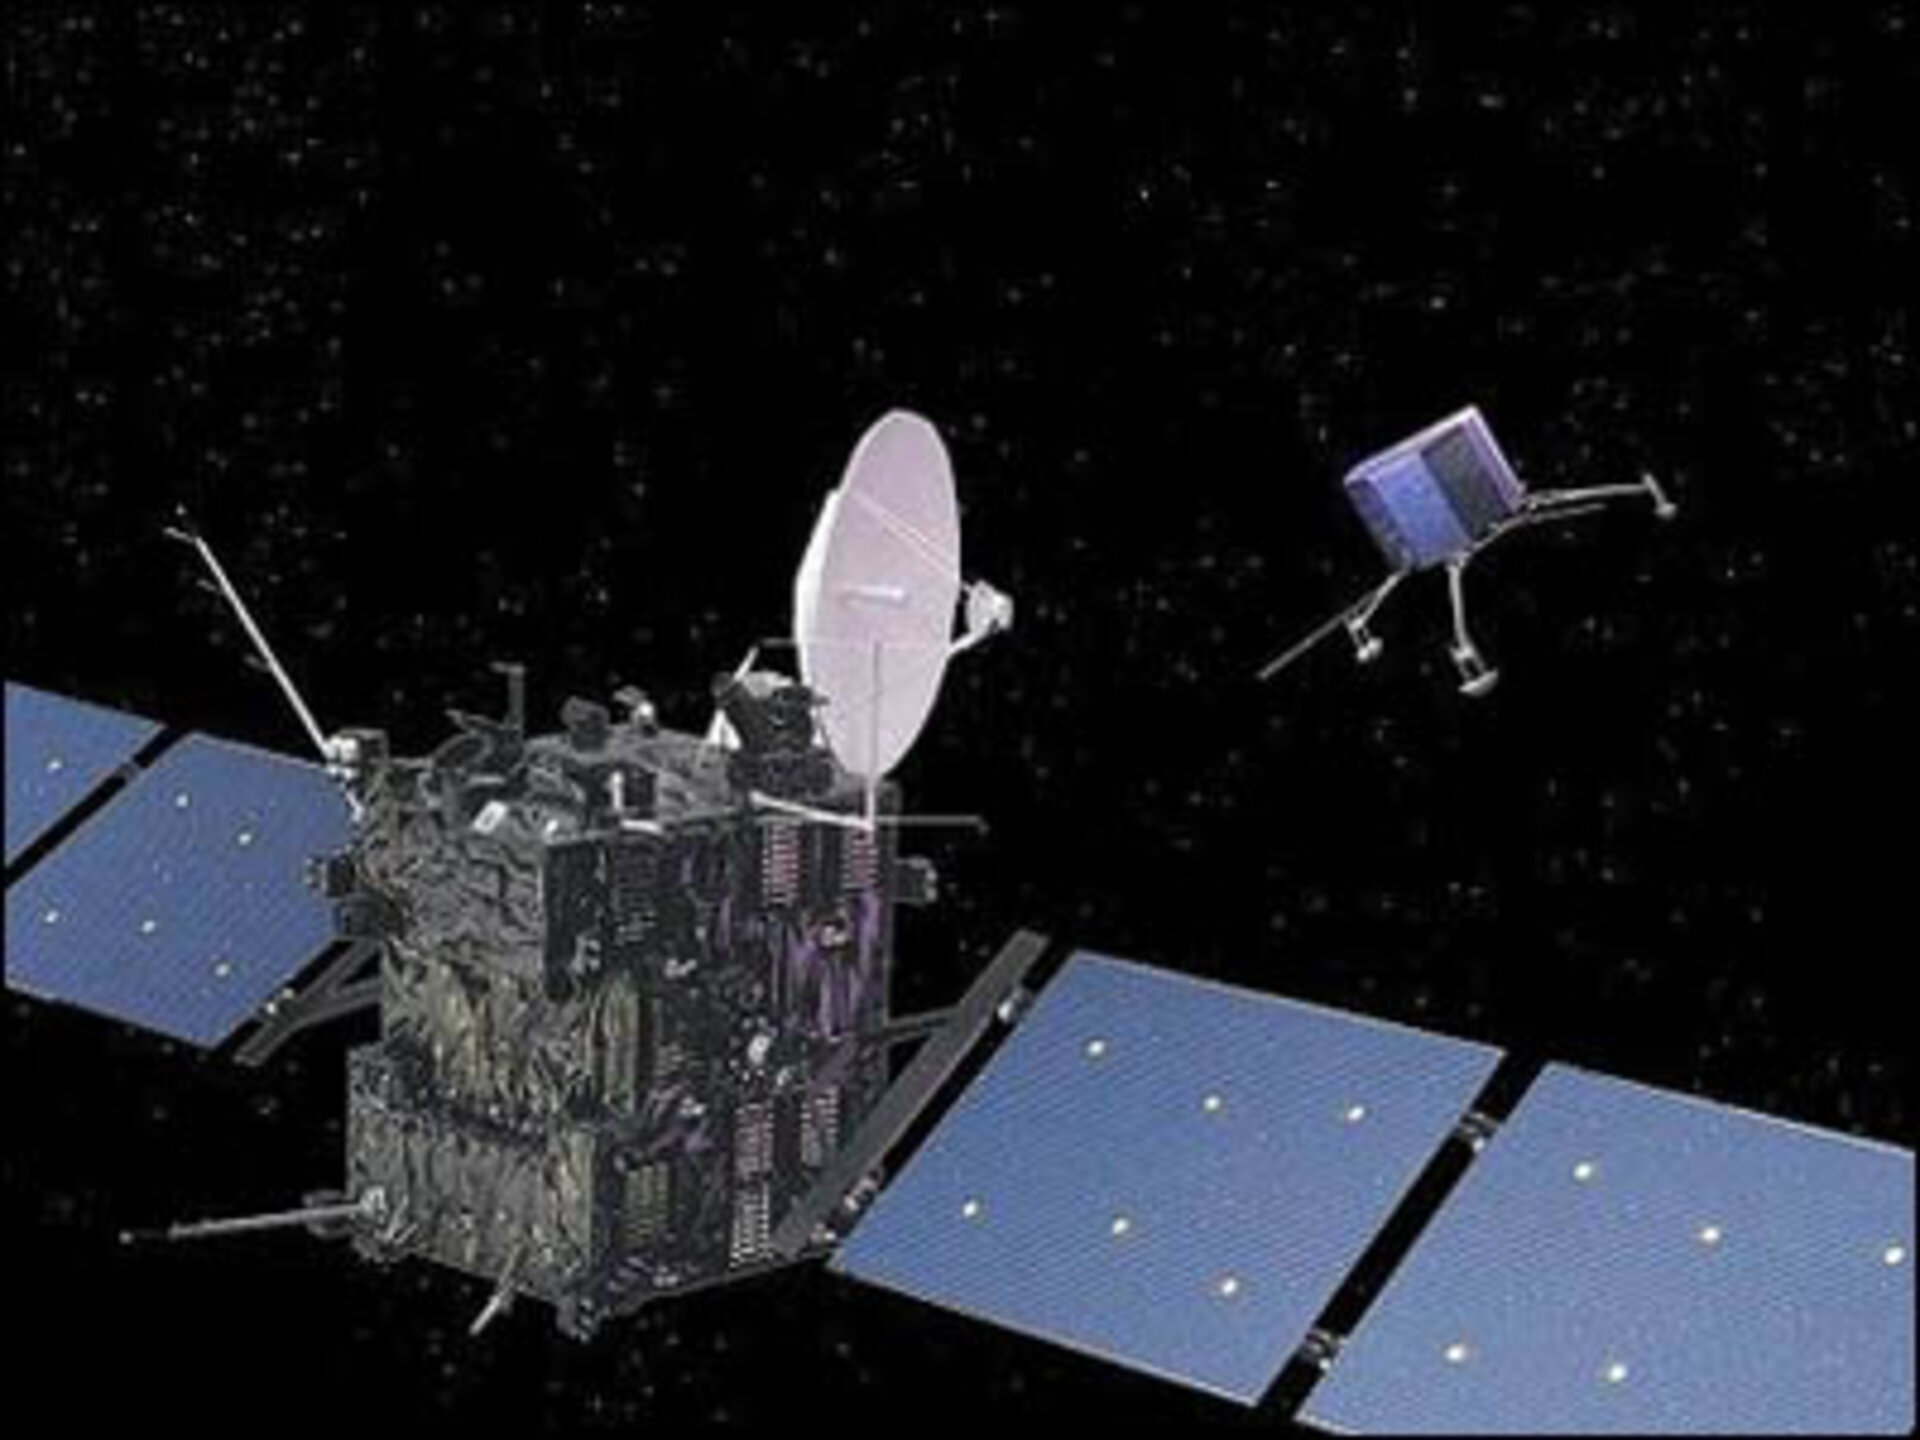 Artist's impression of Rosetta orbiter and lander